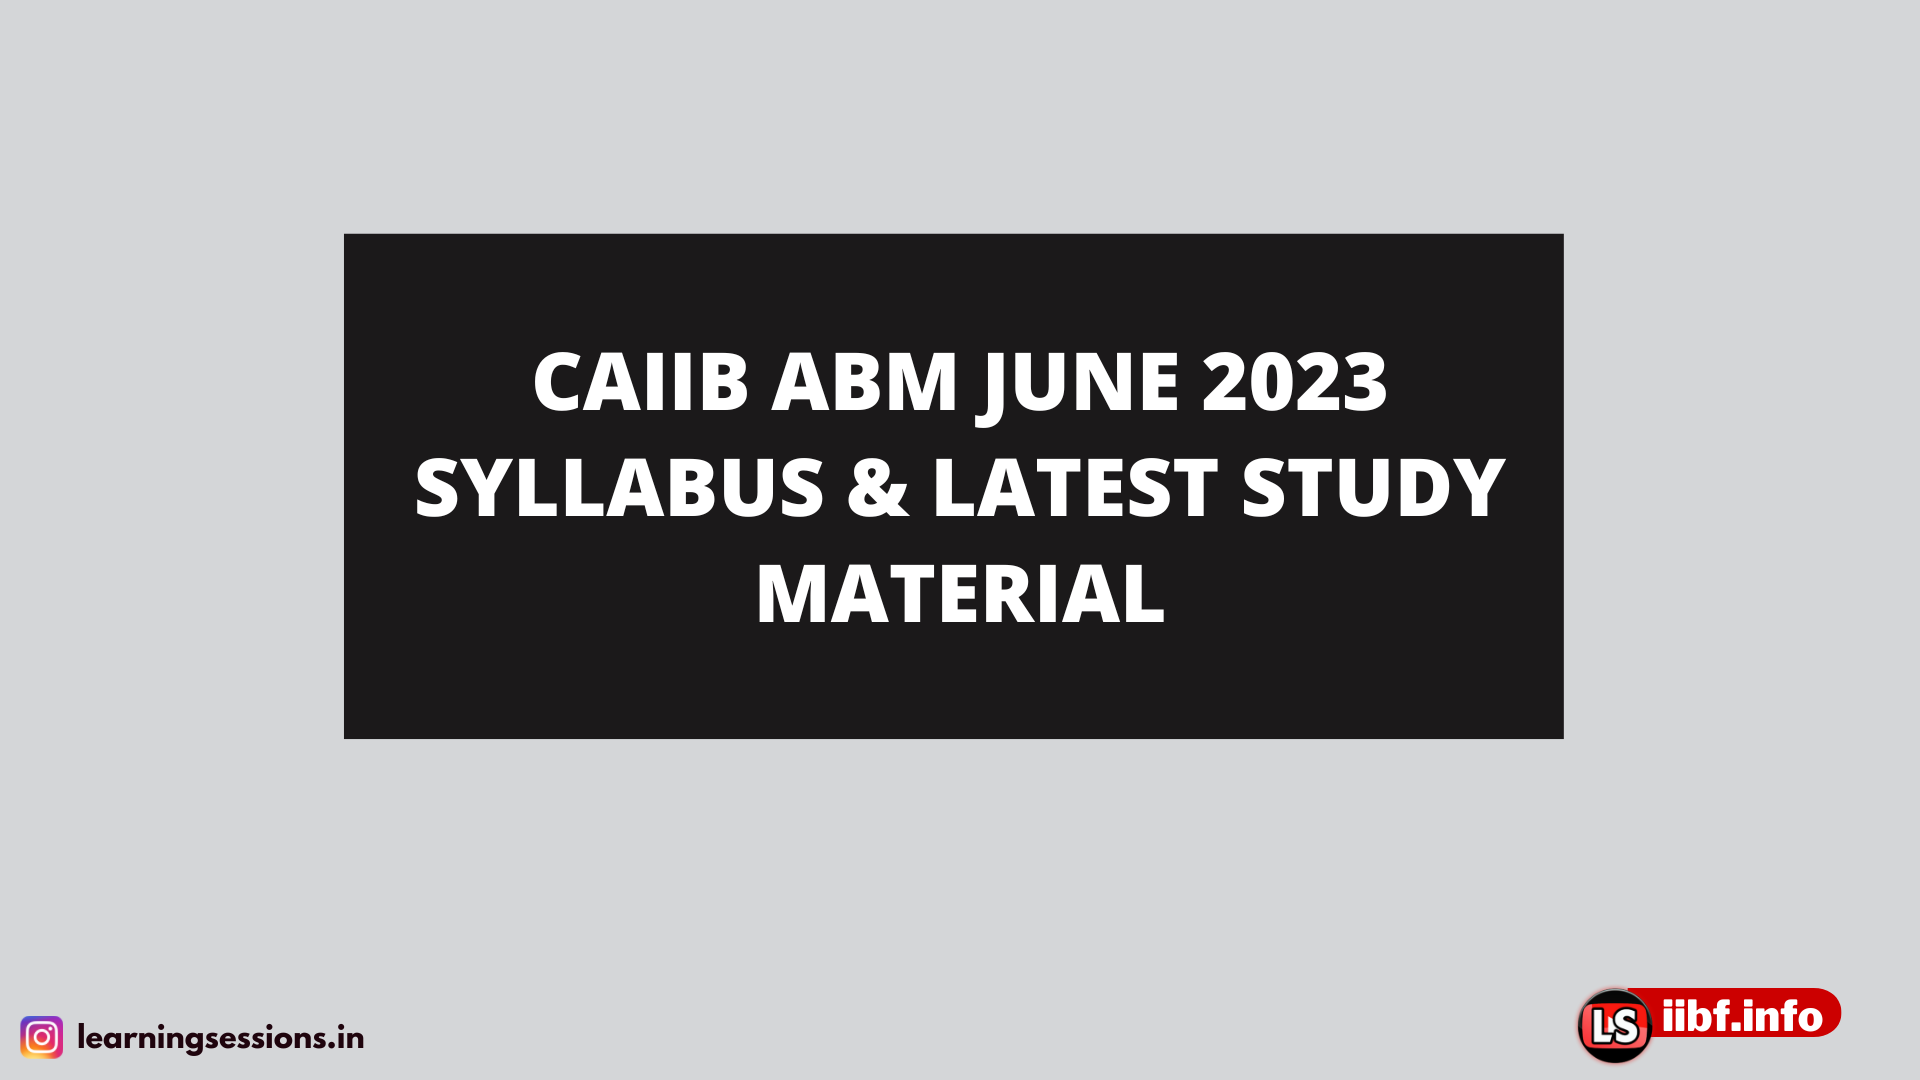 CAIIB ABM JUNE 2023 SYLLABUS & LATEST STUDY MATERIAL